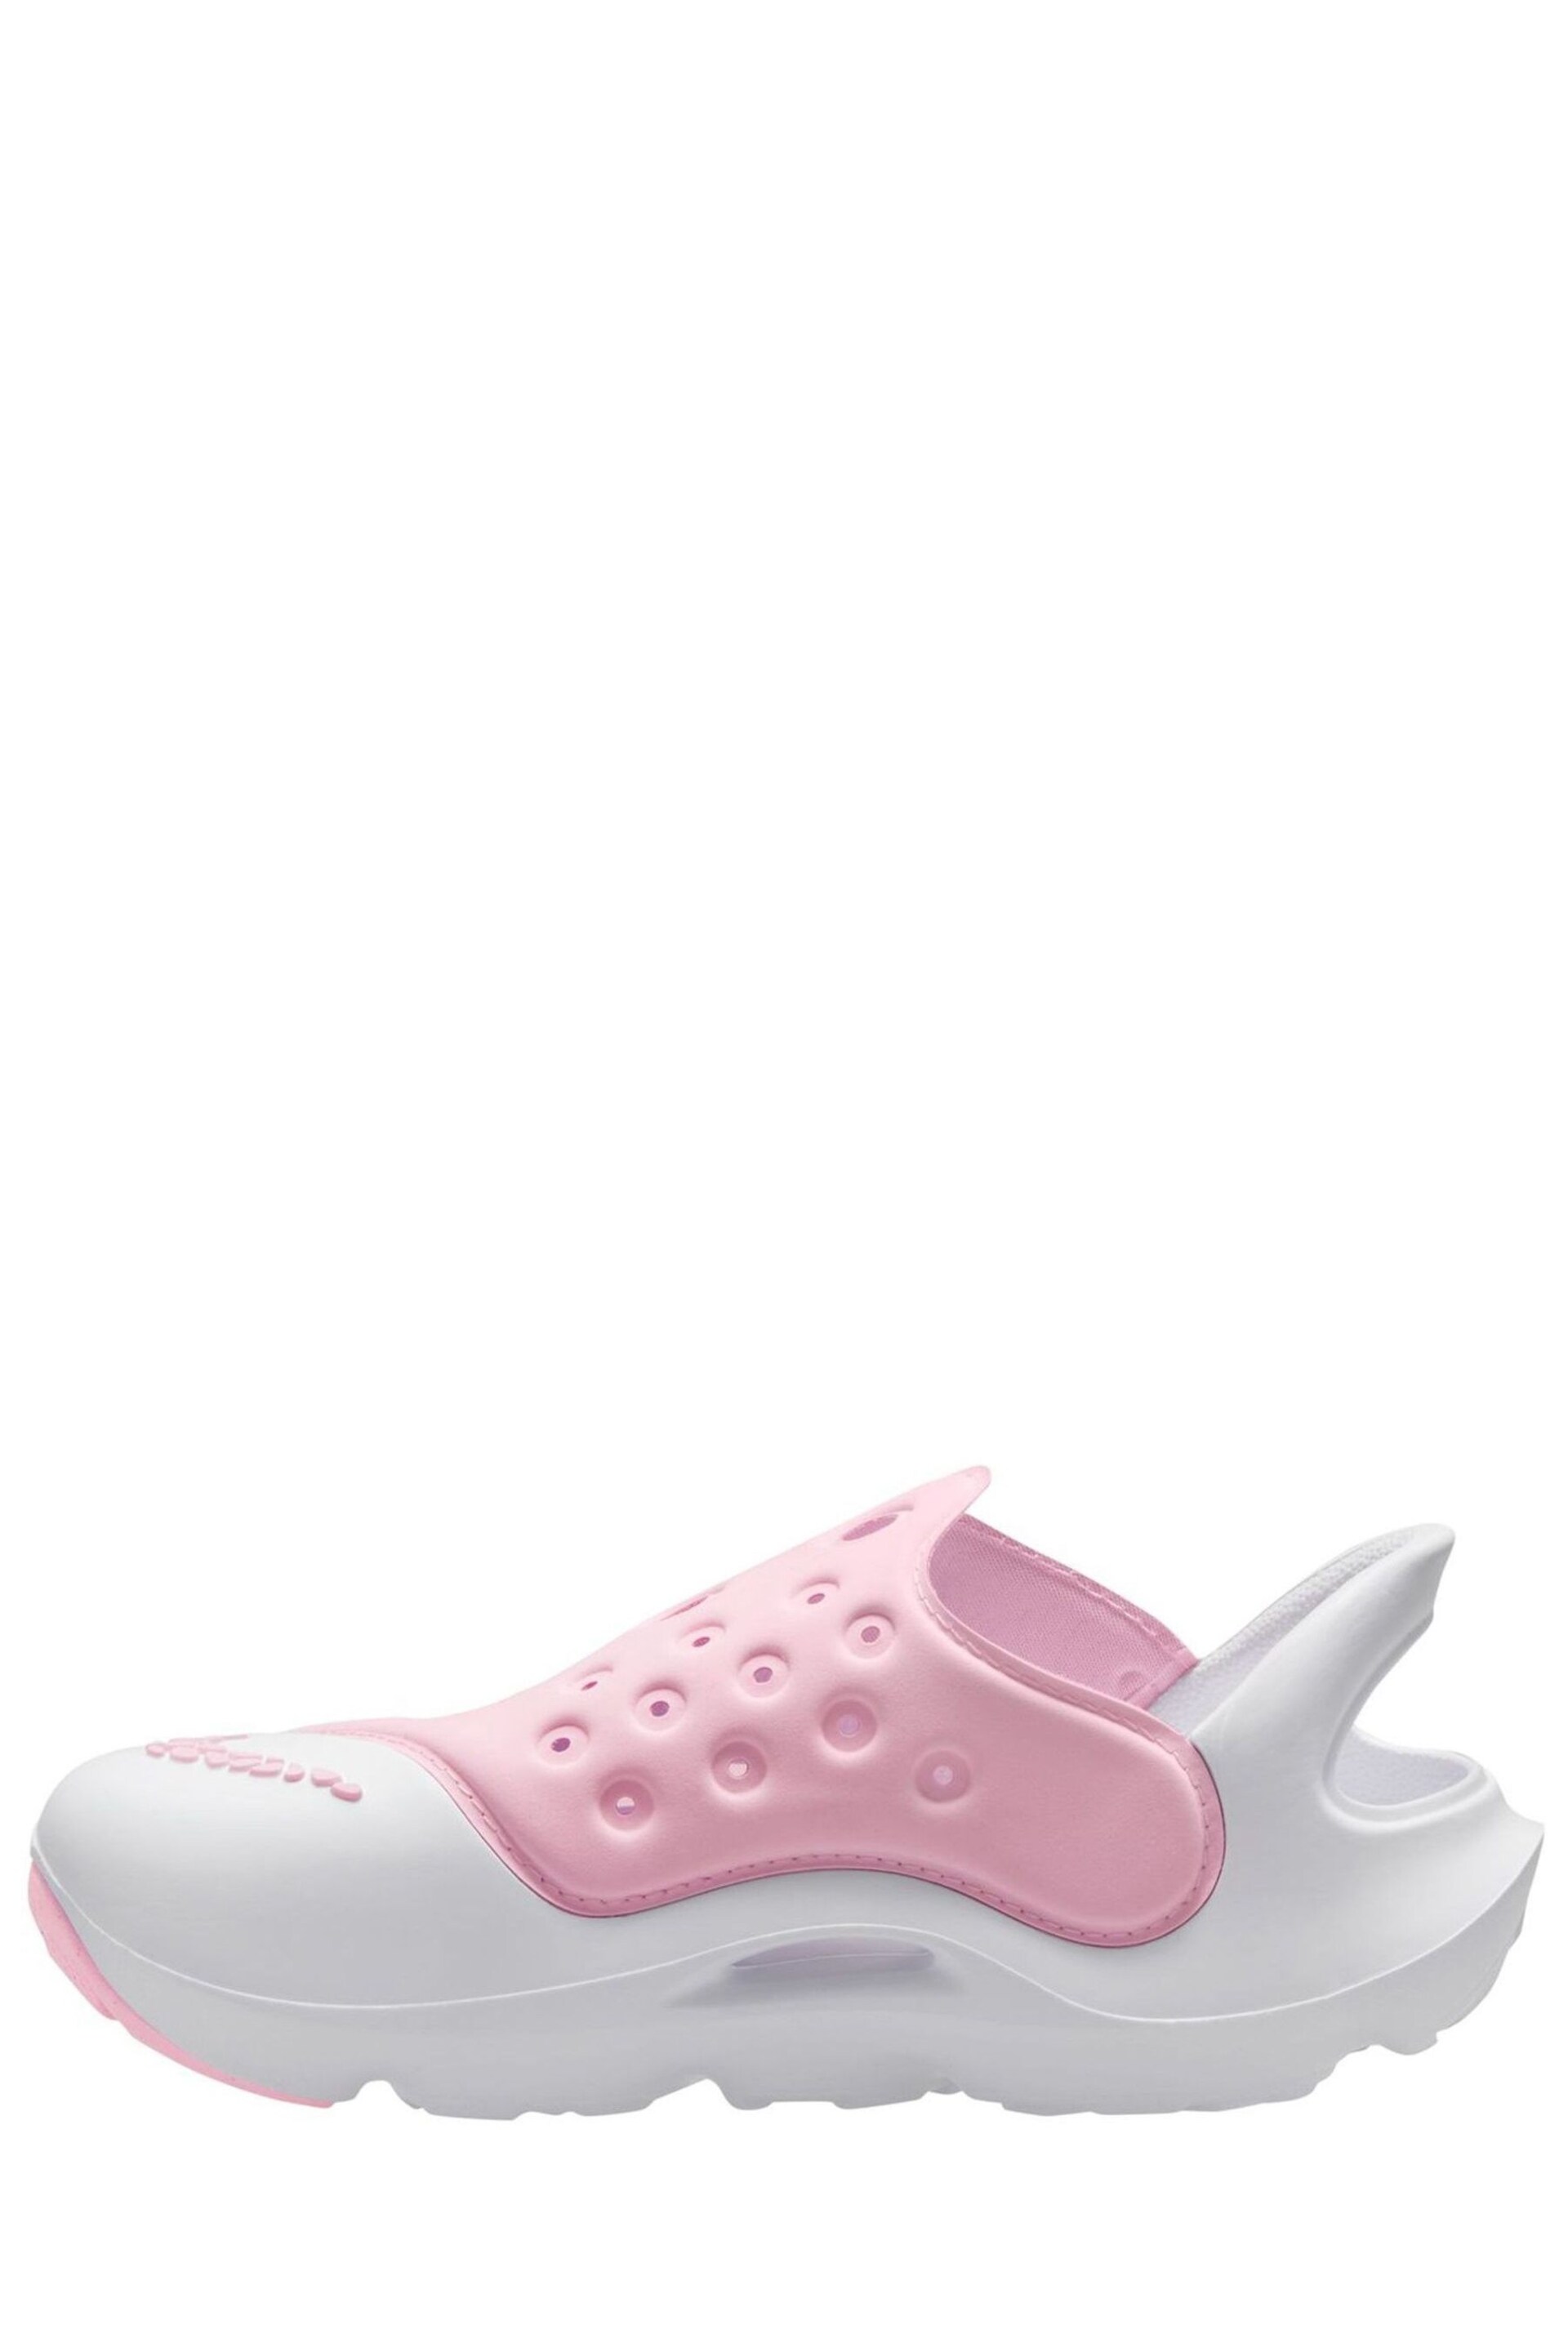 Nike Pink Sol Junior Pink Sandals - Image 2 of 4